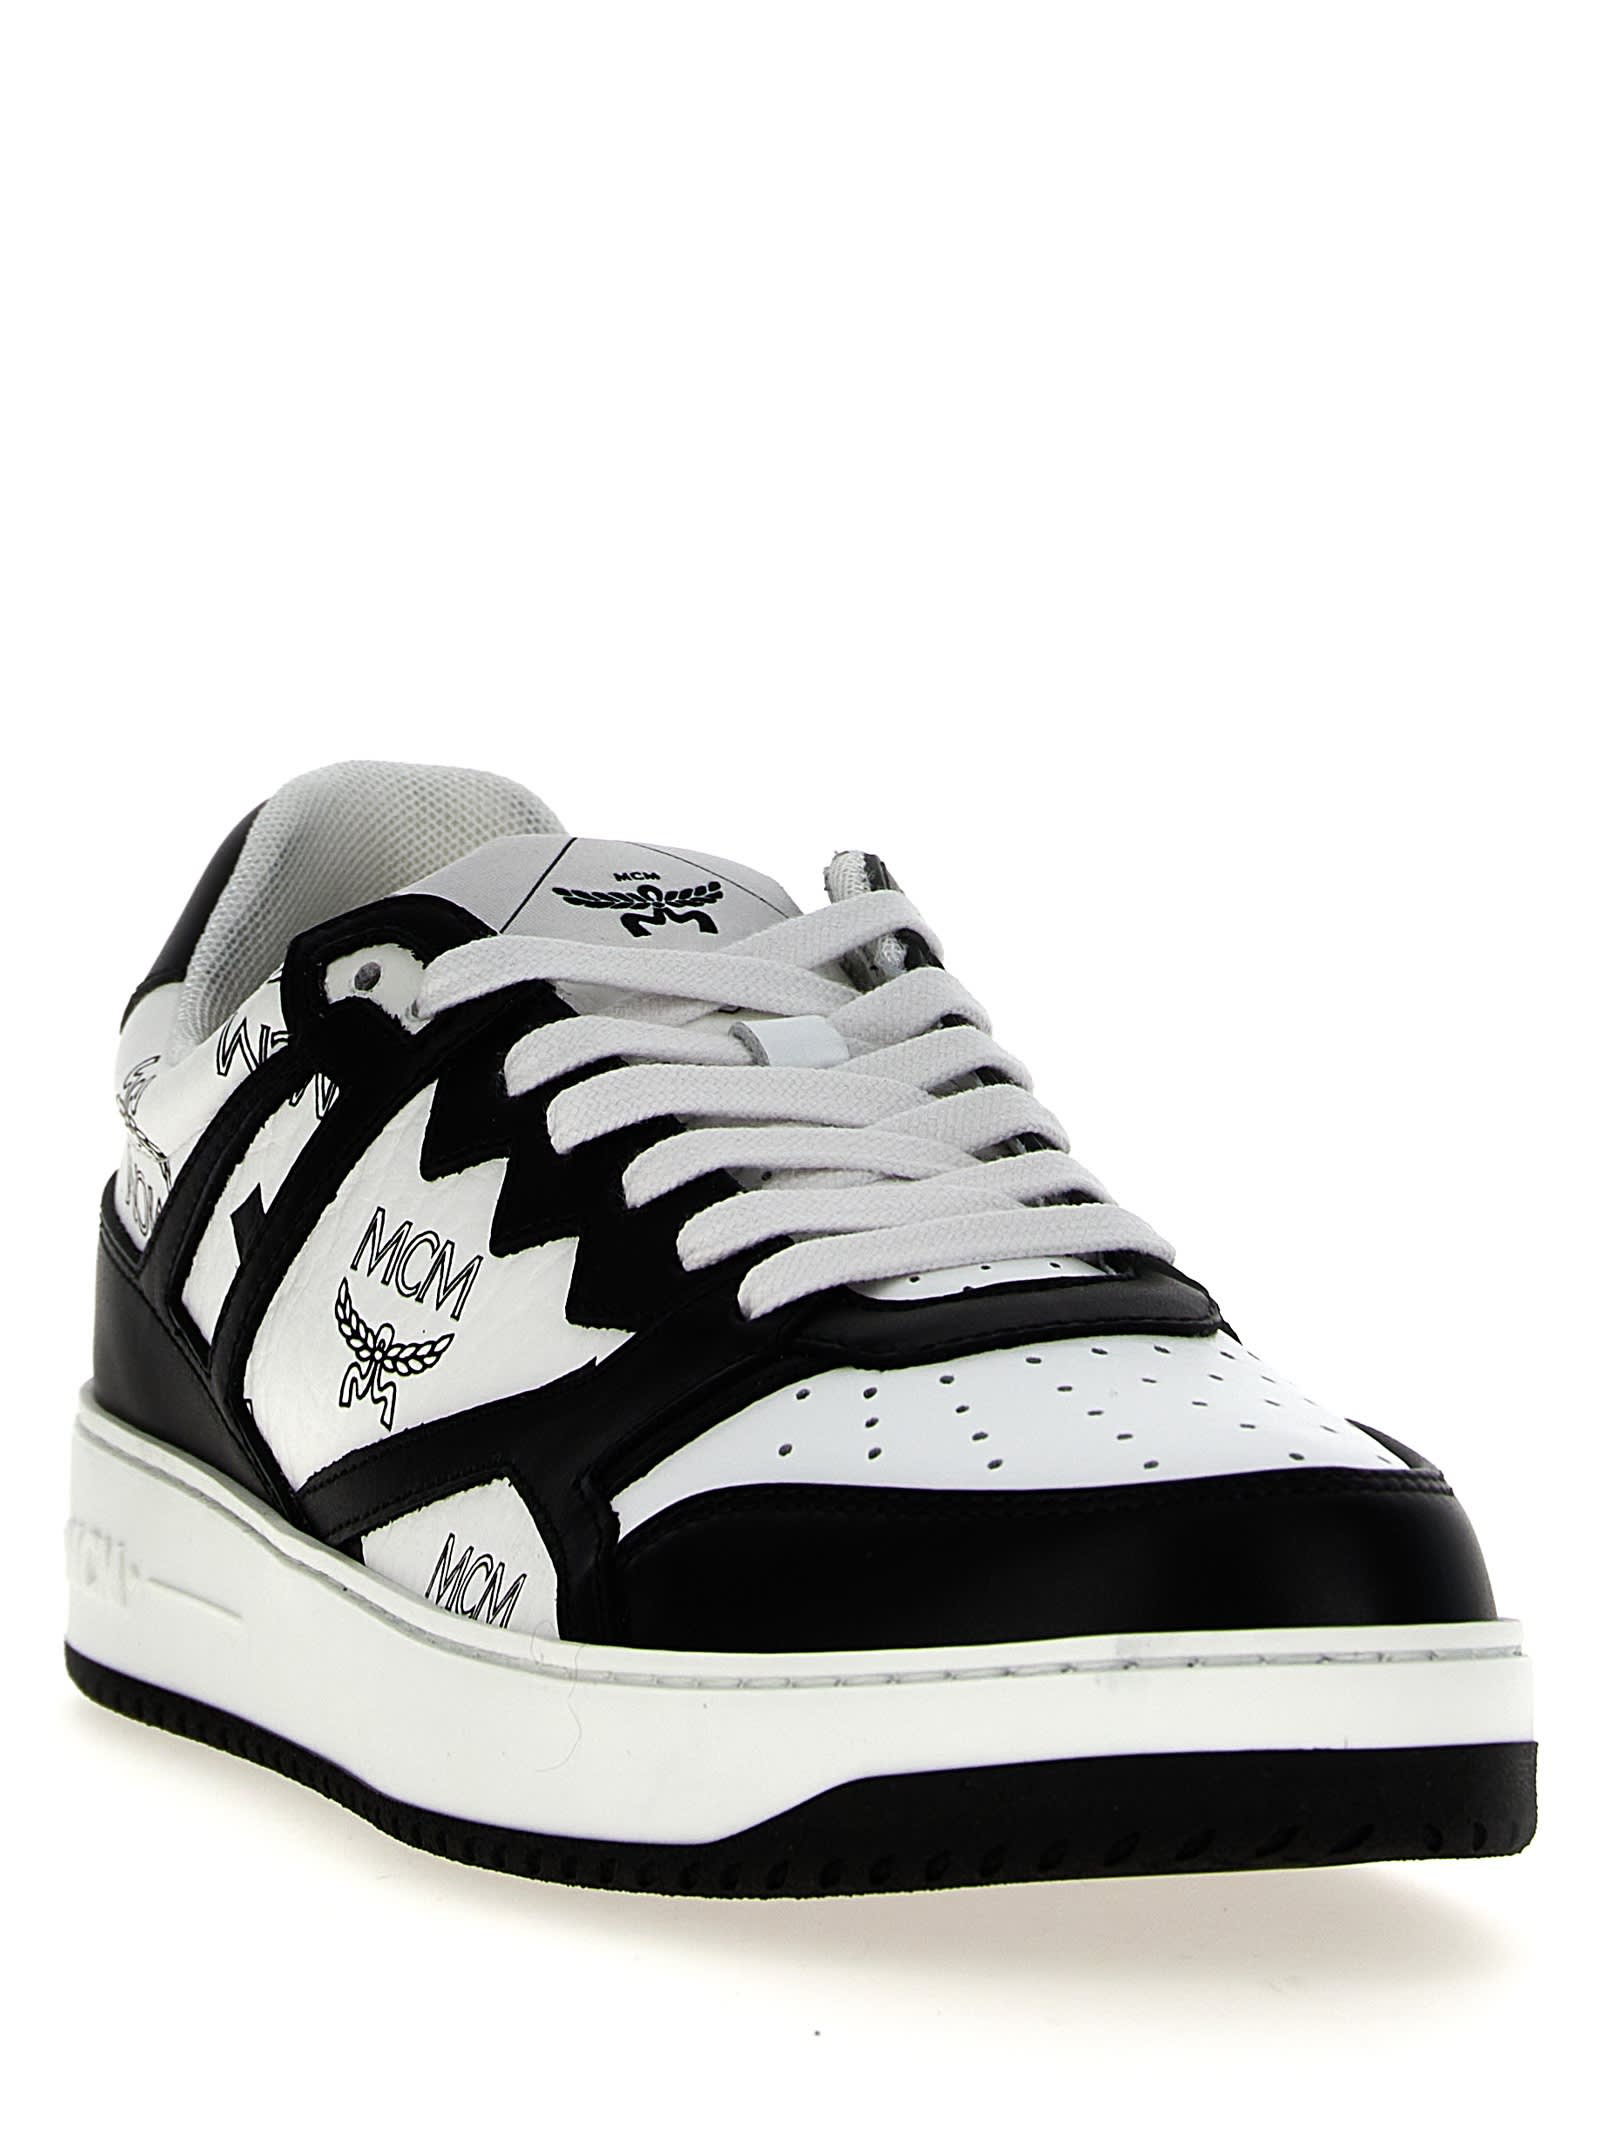 Shop Mcm Neo Terrain Sneakers In White/black